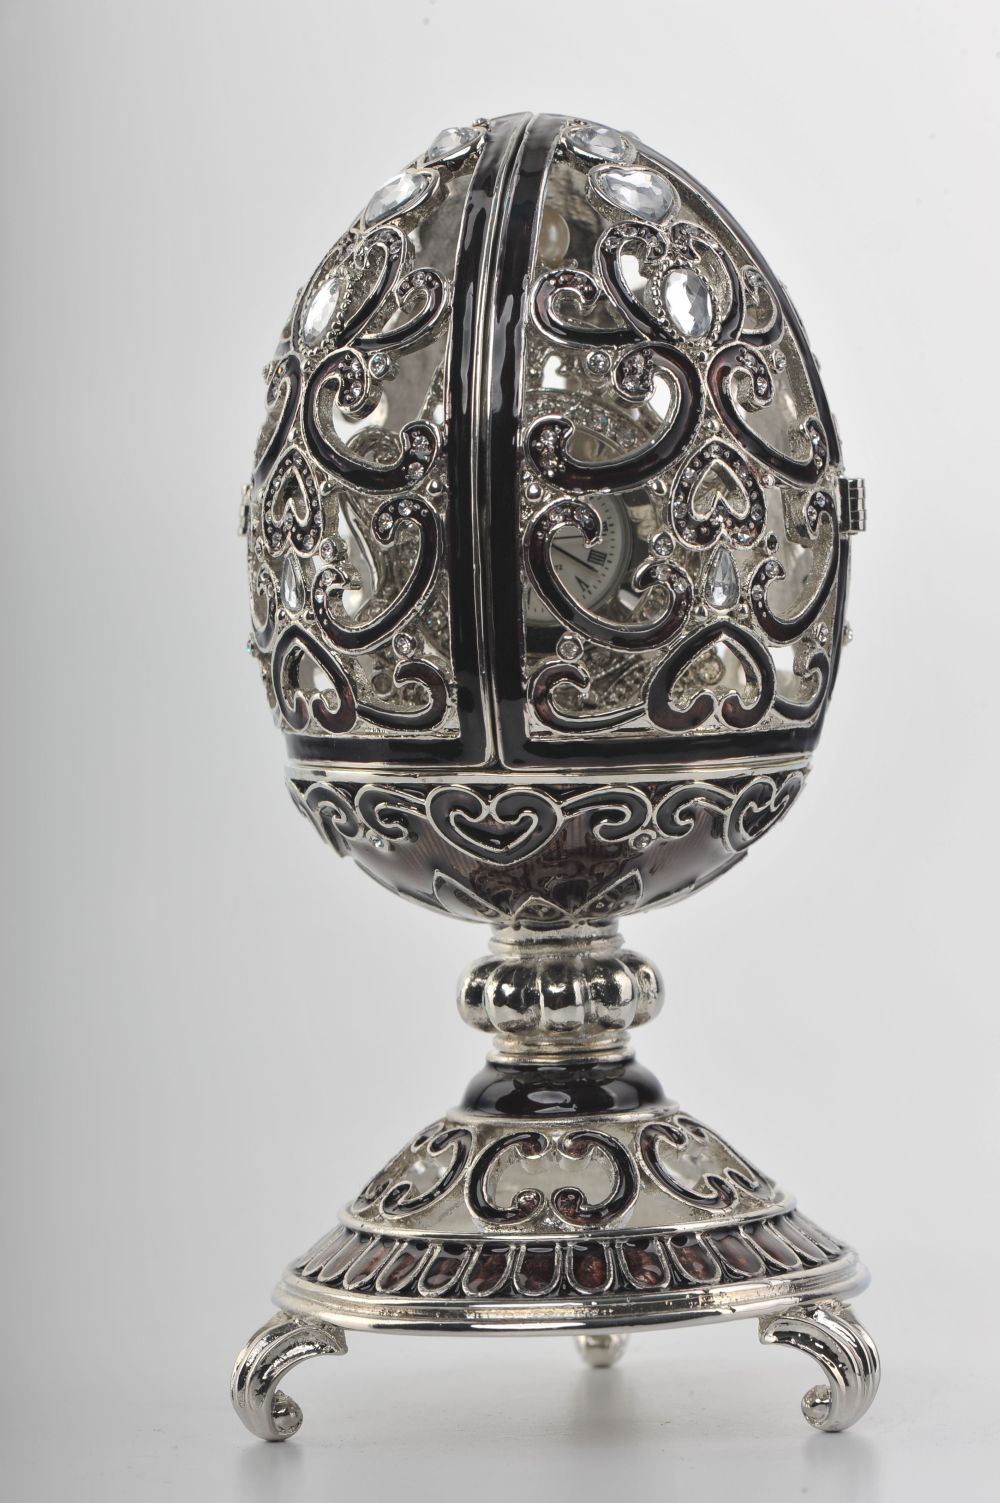 Keren Kopal Silver & Black Faberge Style Egg with a Clock Inside  154.00